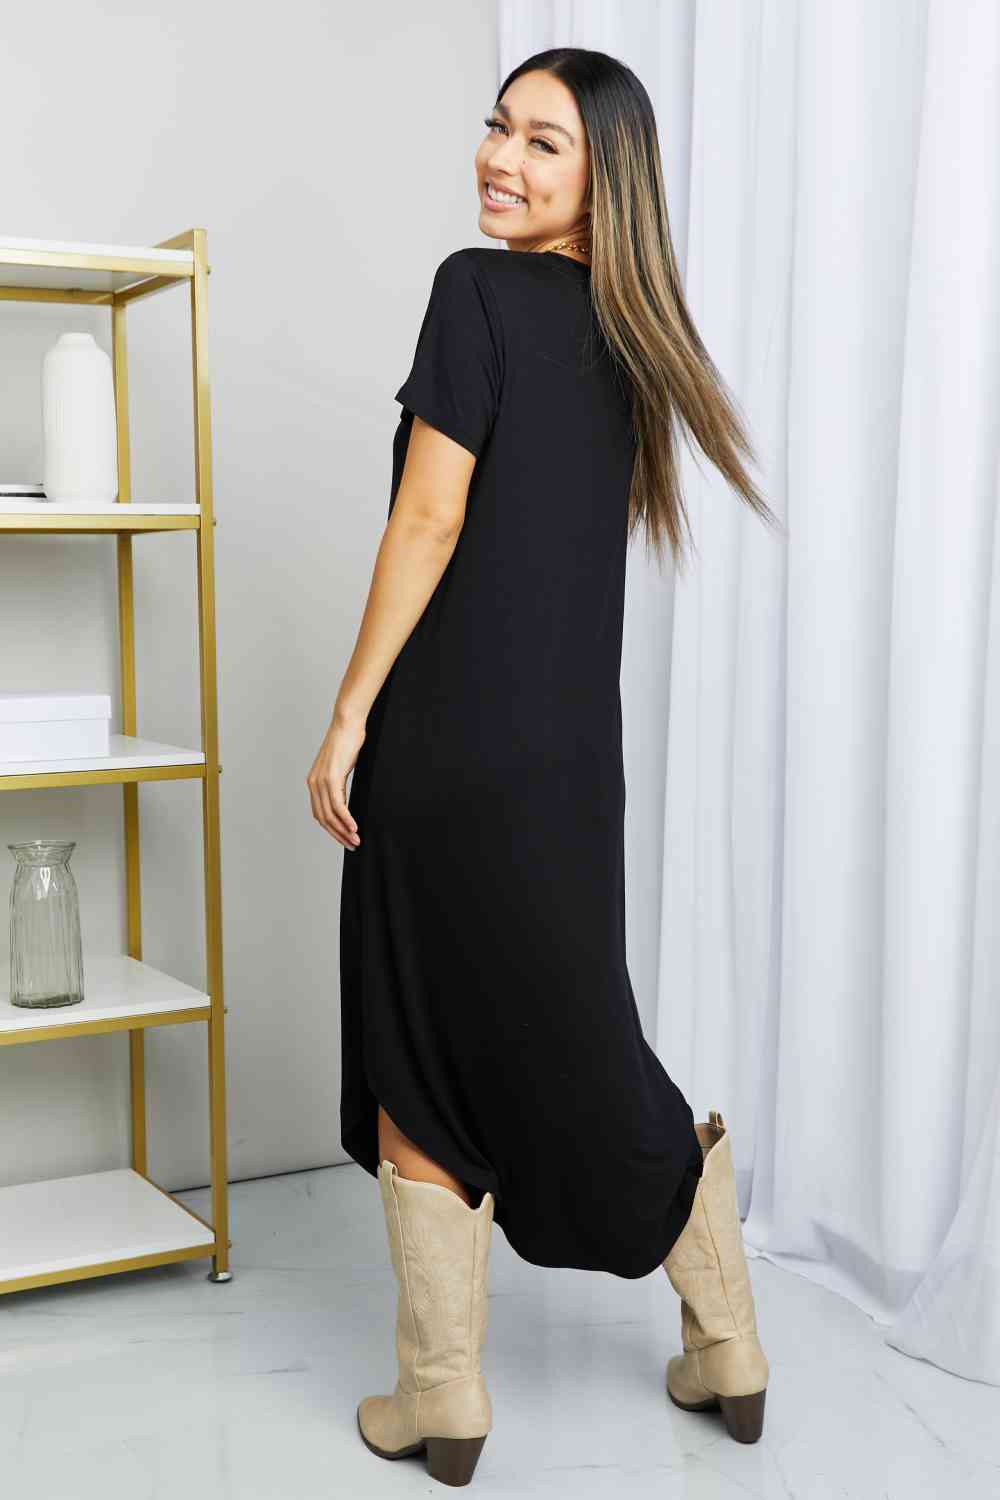 HYFVE V-Neck Short Sleeve Curved Hem Dress in Black